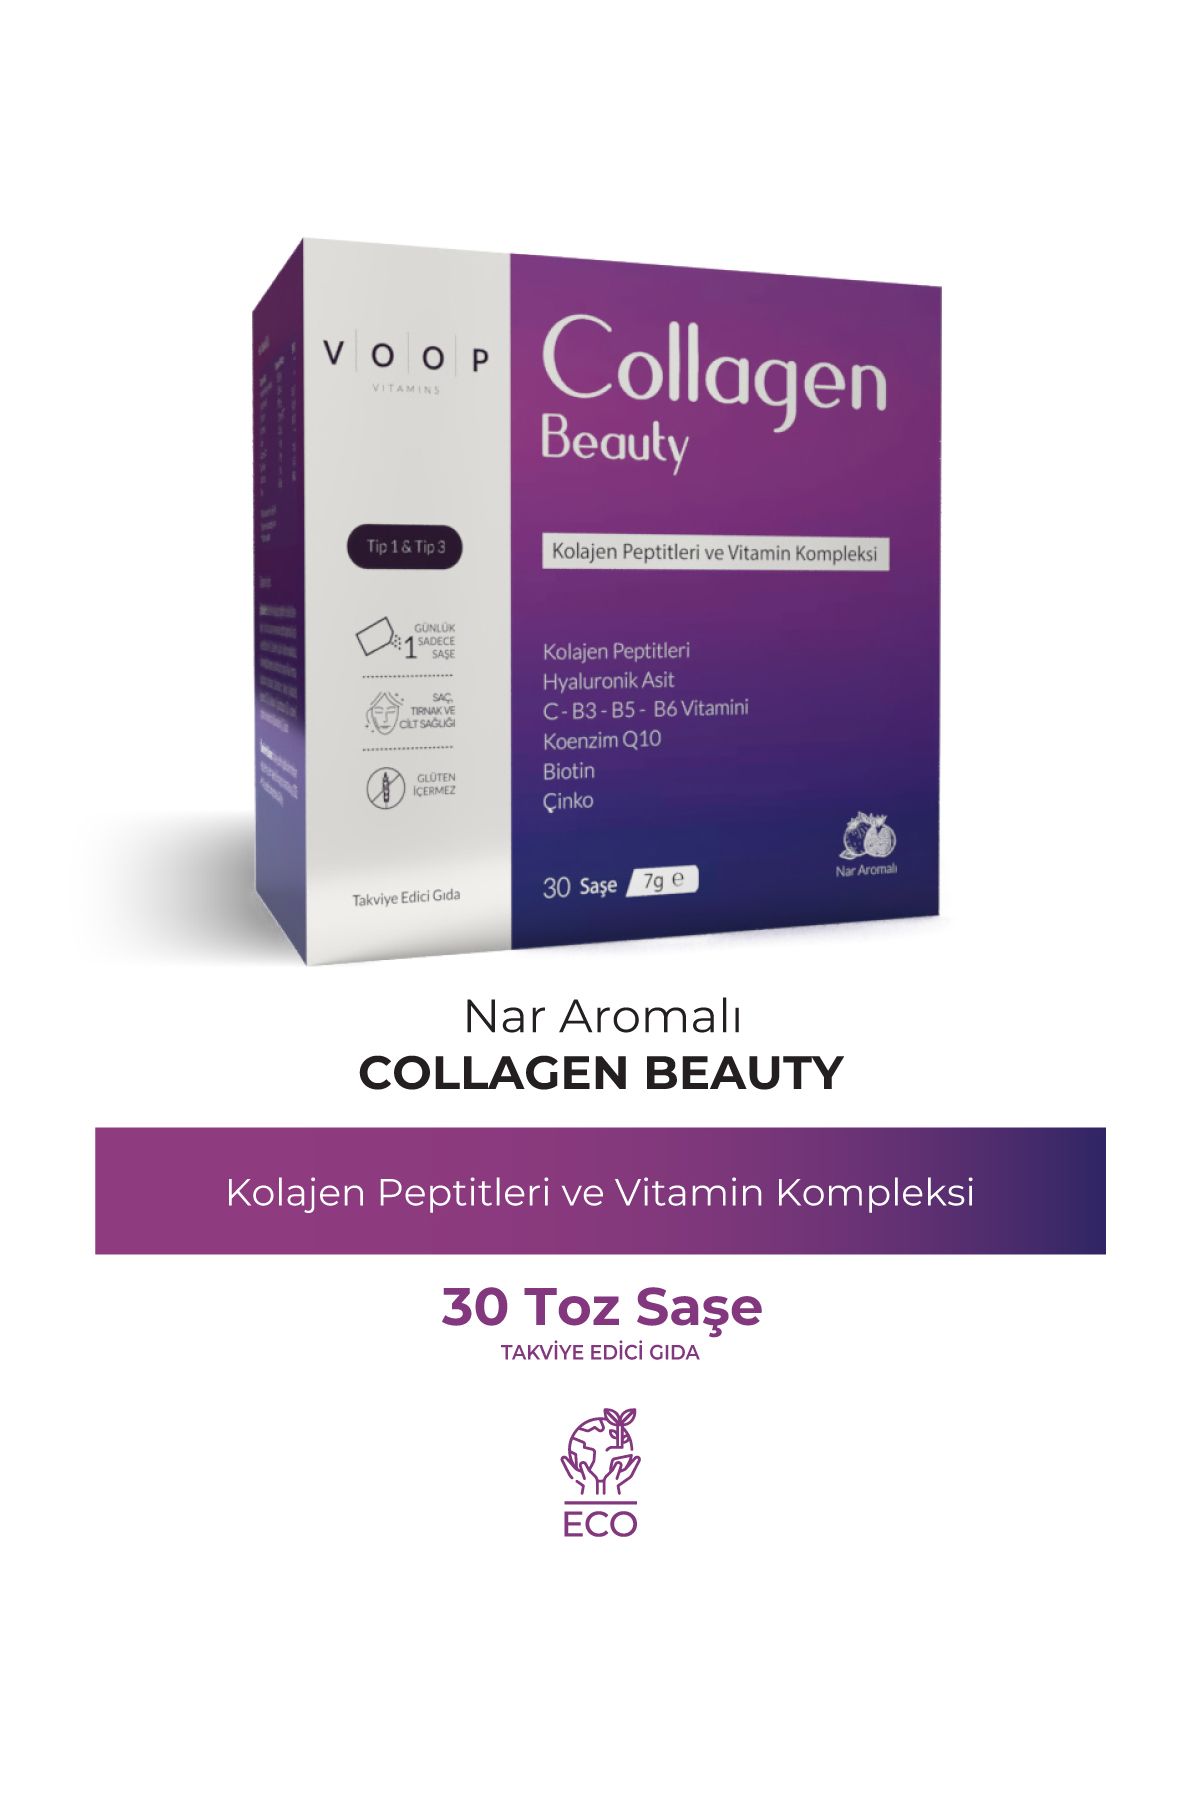 VOOP Collagen Beauty Nar Aromalı Saşe Tip 1 Ve Tip 3 - 5500 Mg 30x7 gr | Hyaluronic Asit Q10 Biotin Çinko